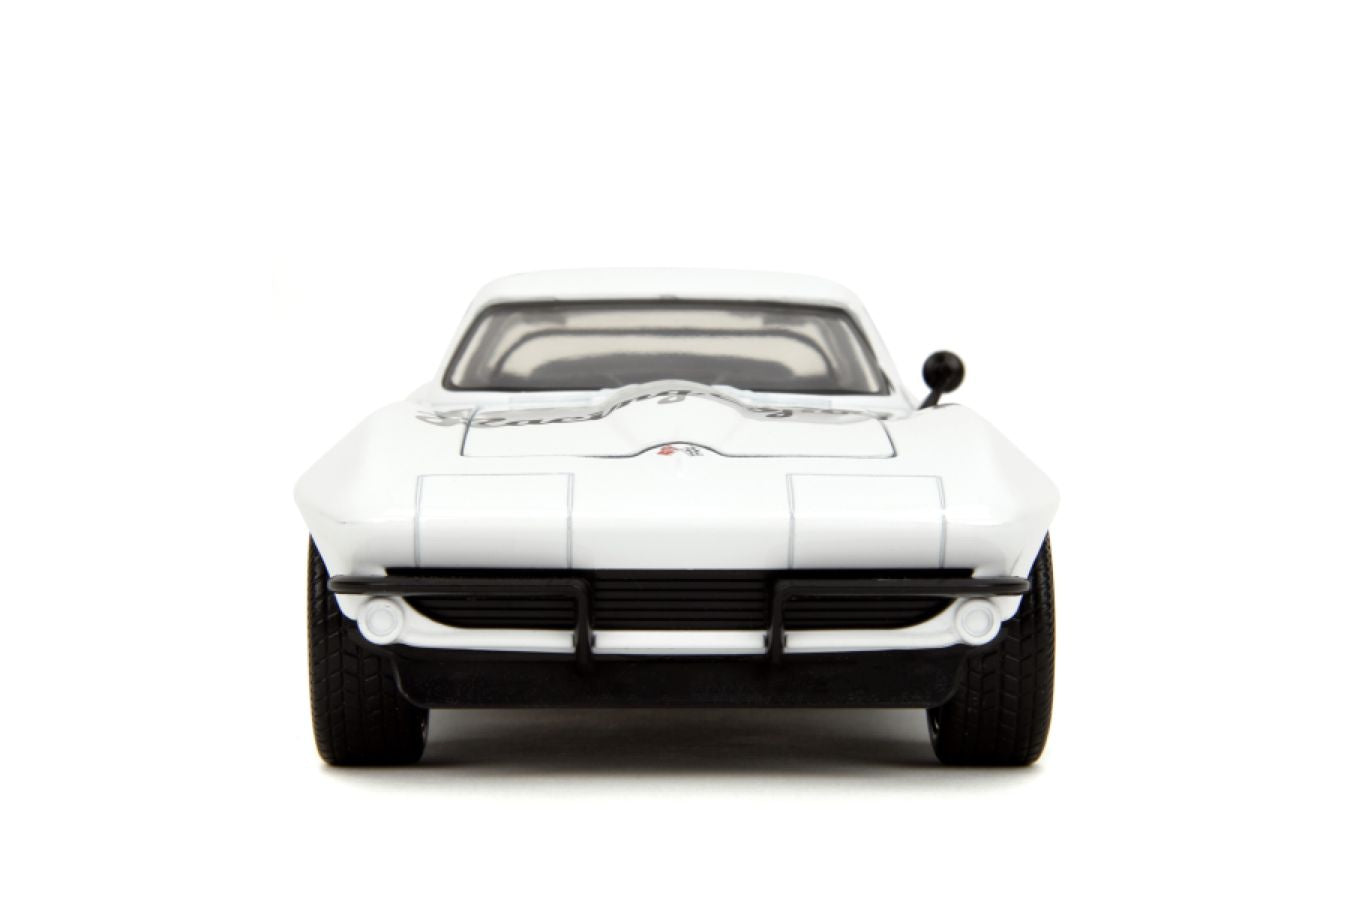 Big Time Muscle: Dark Horse - 1966 Chevorlet Corvette 1:24 Scale Die-cast Vehicle